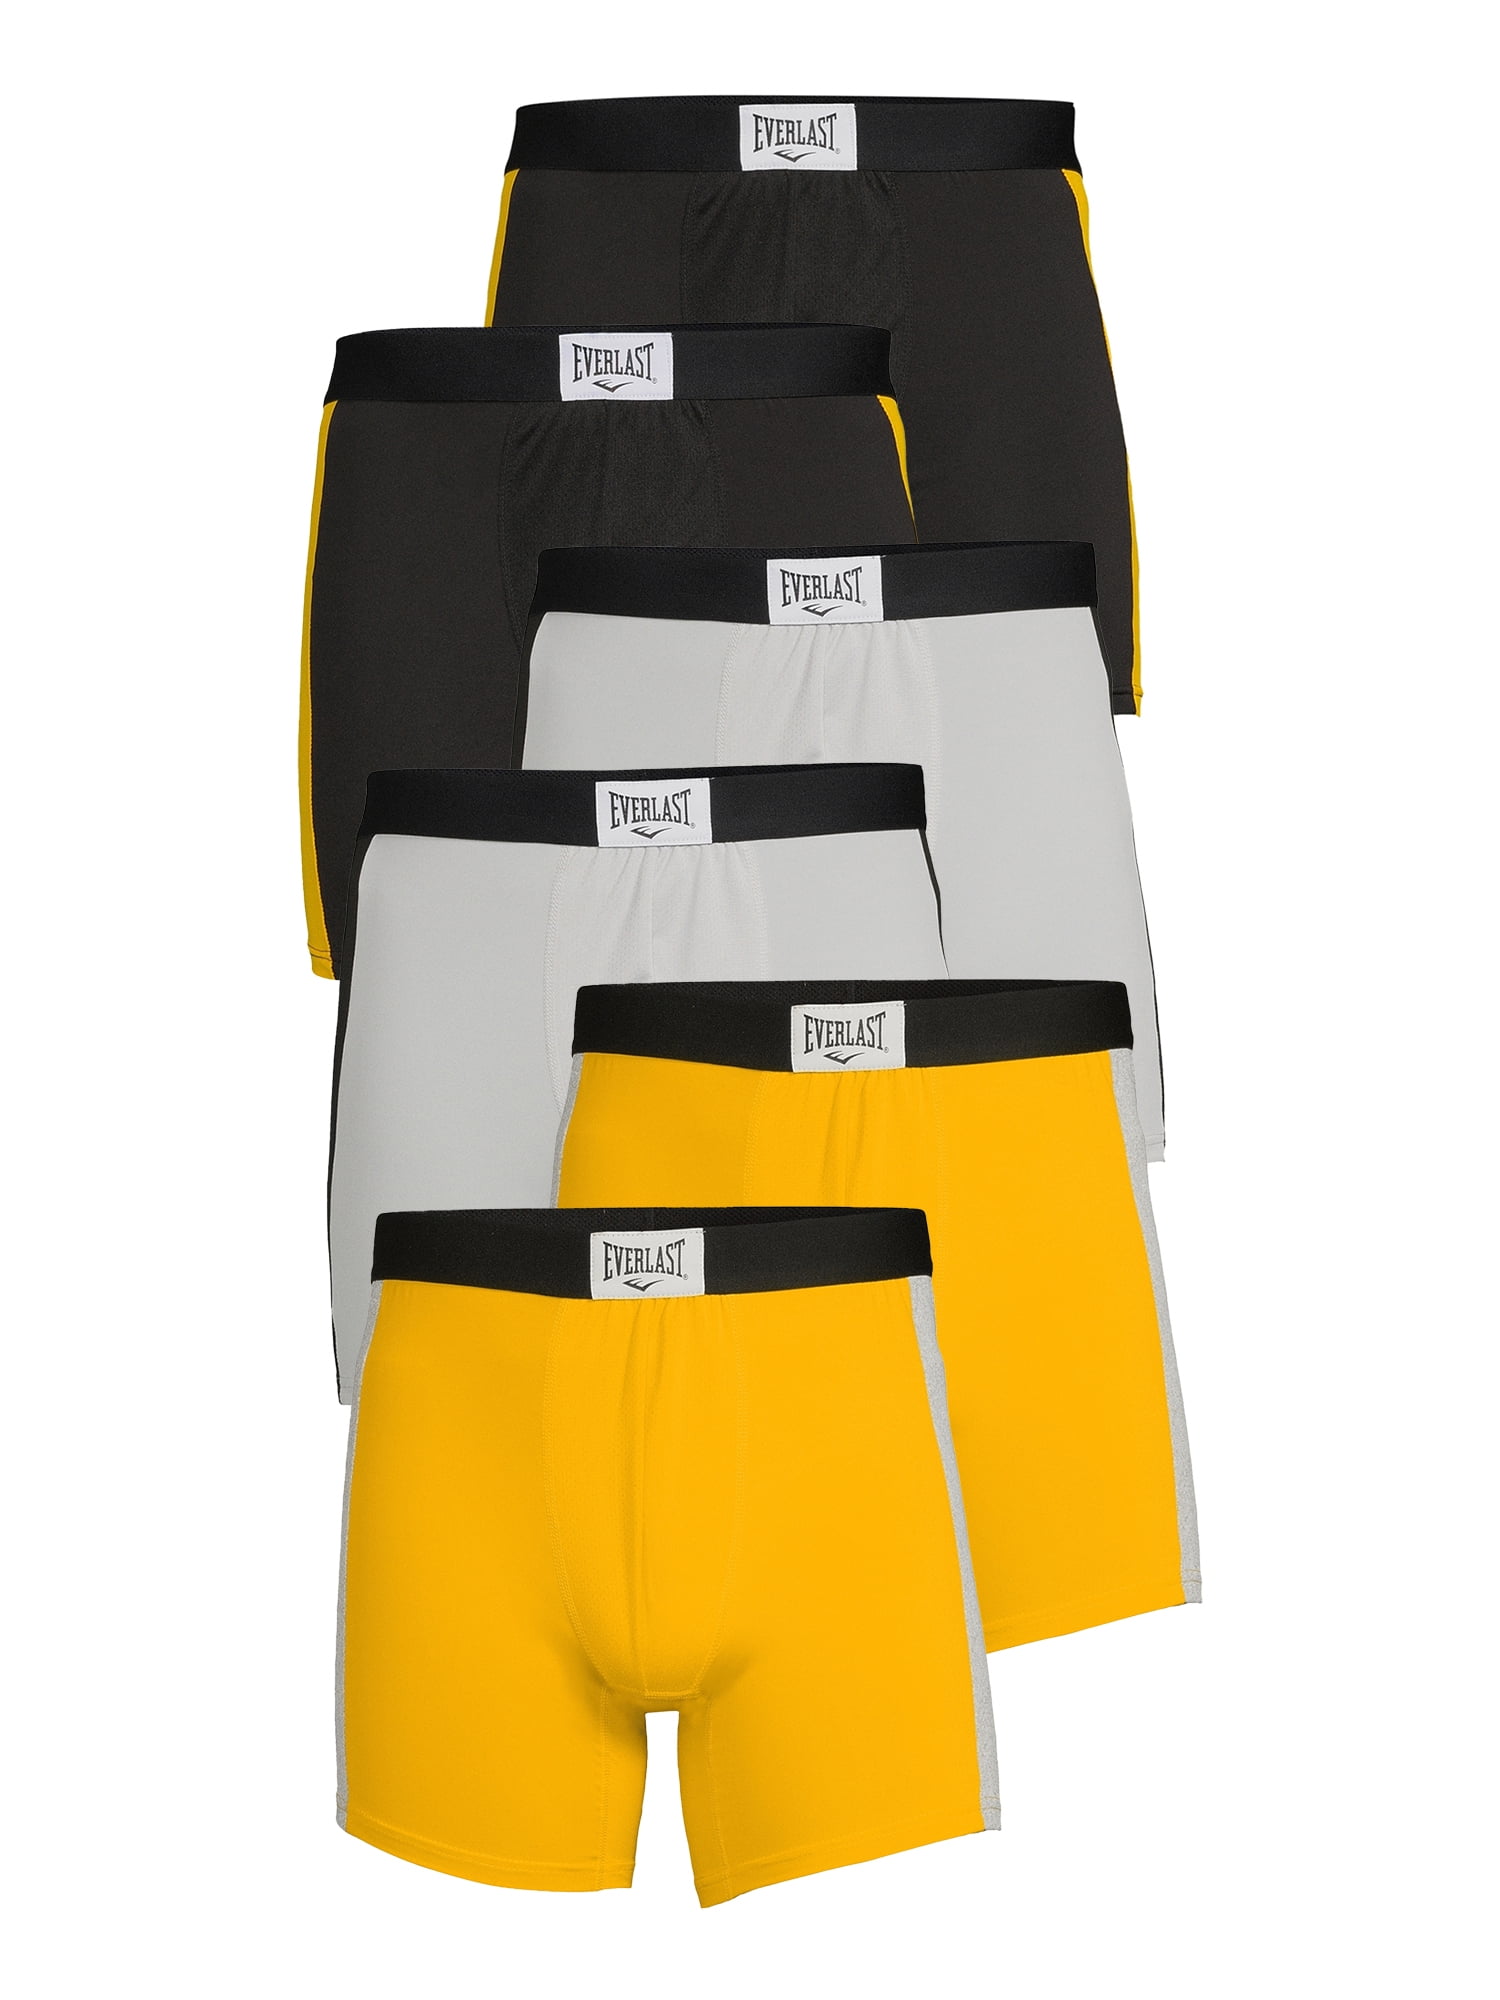 Geronimo 1861b7 Yellow Boxer for Men, Underwear - Boxers, Fashion clothing  online store